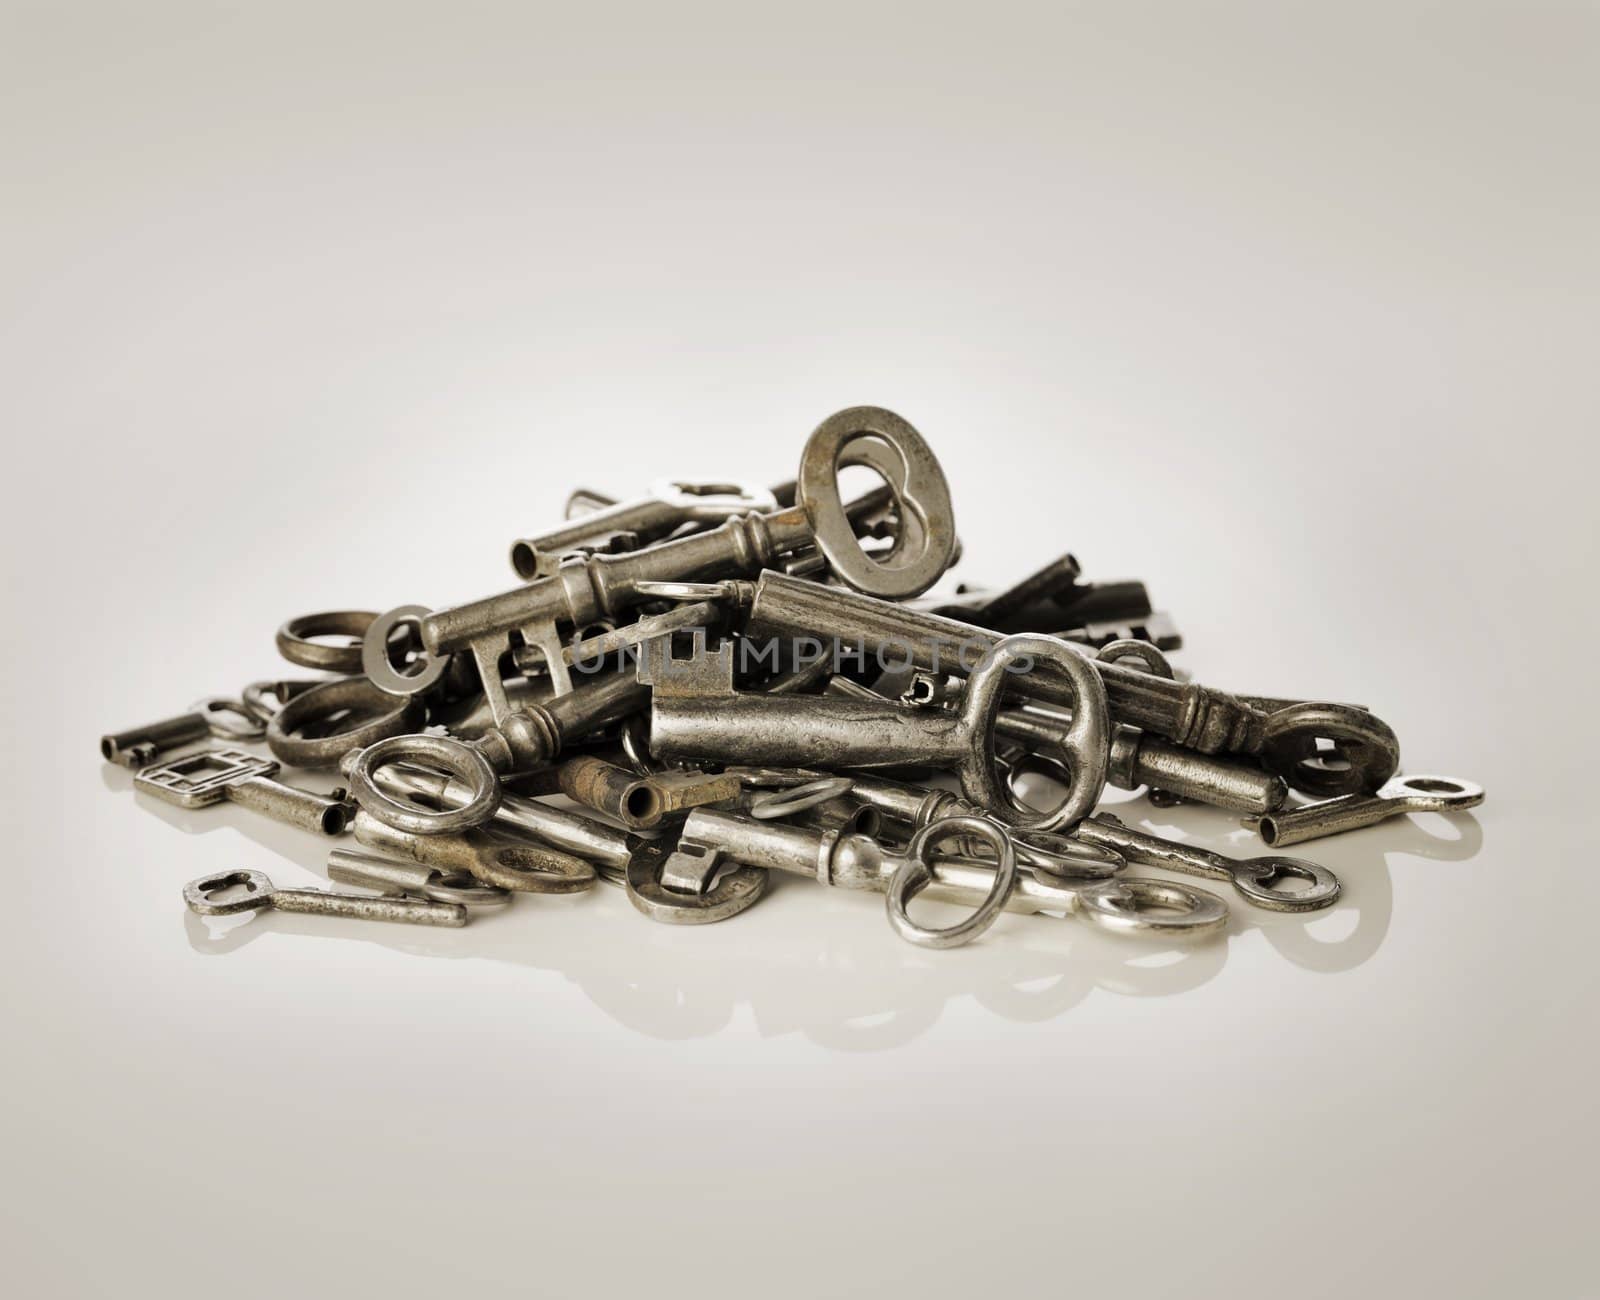 A Pile of old metallic keys.